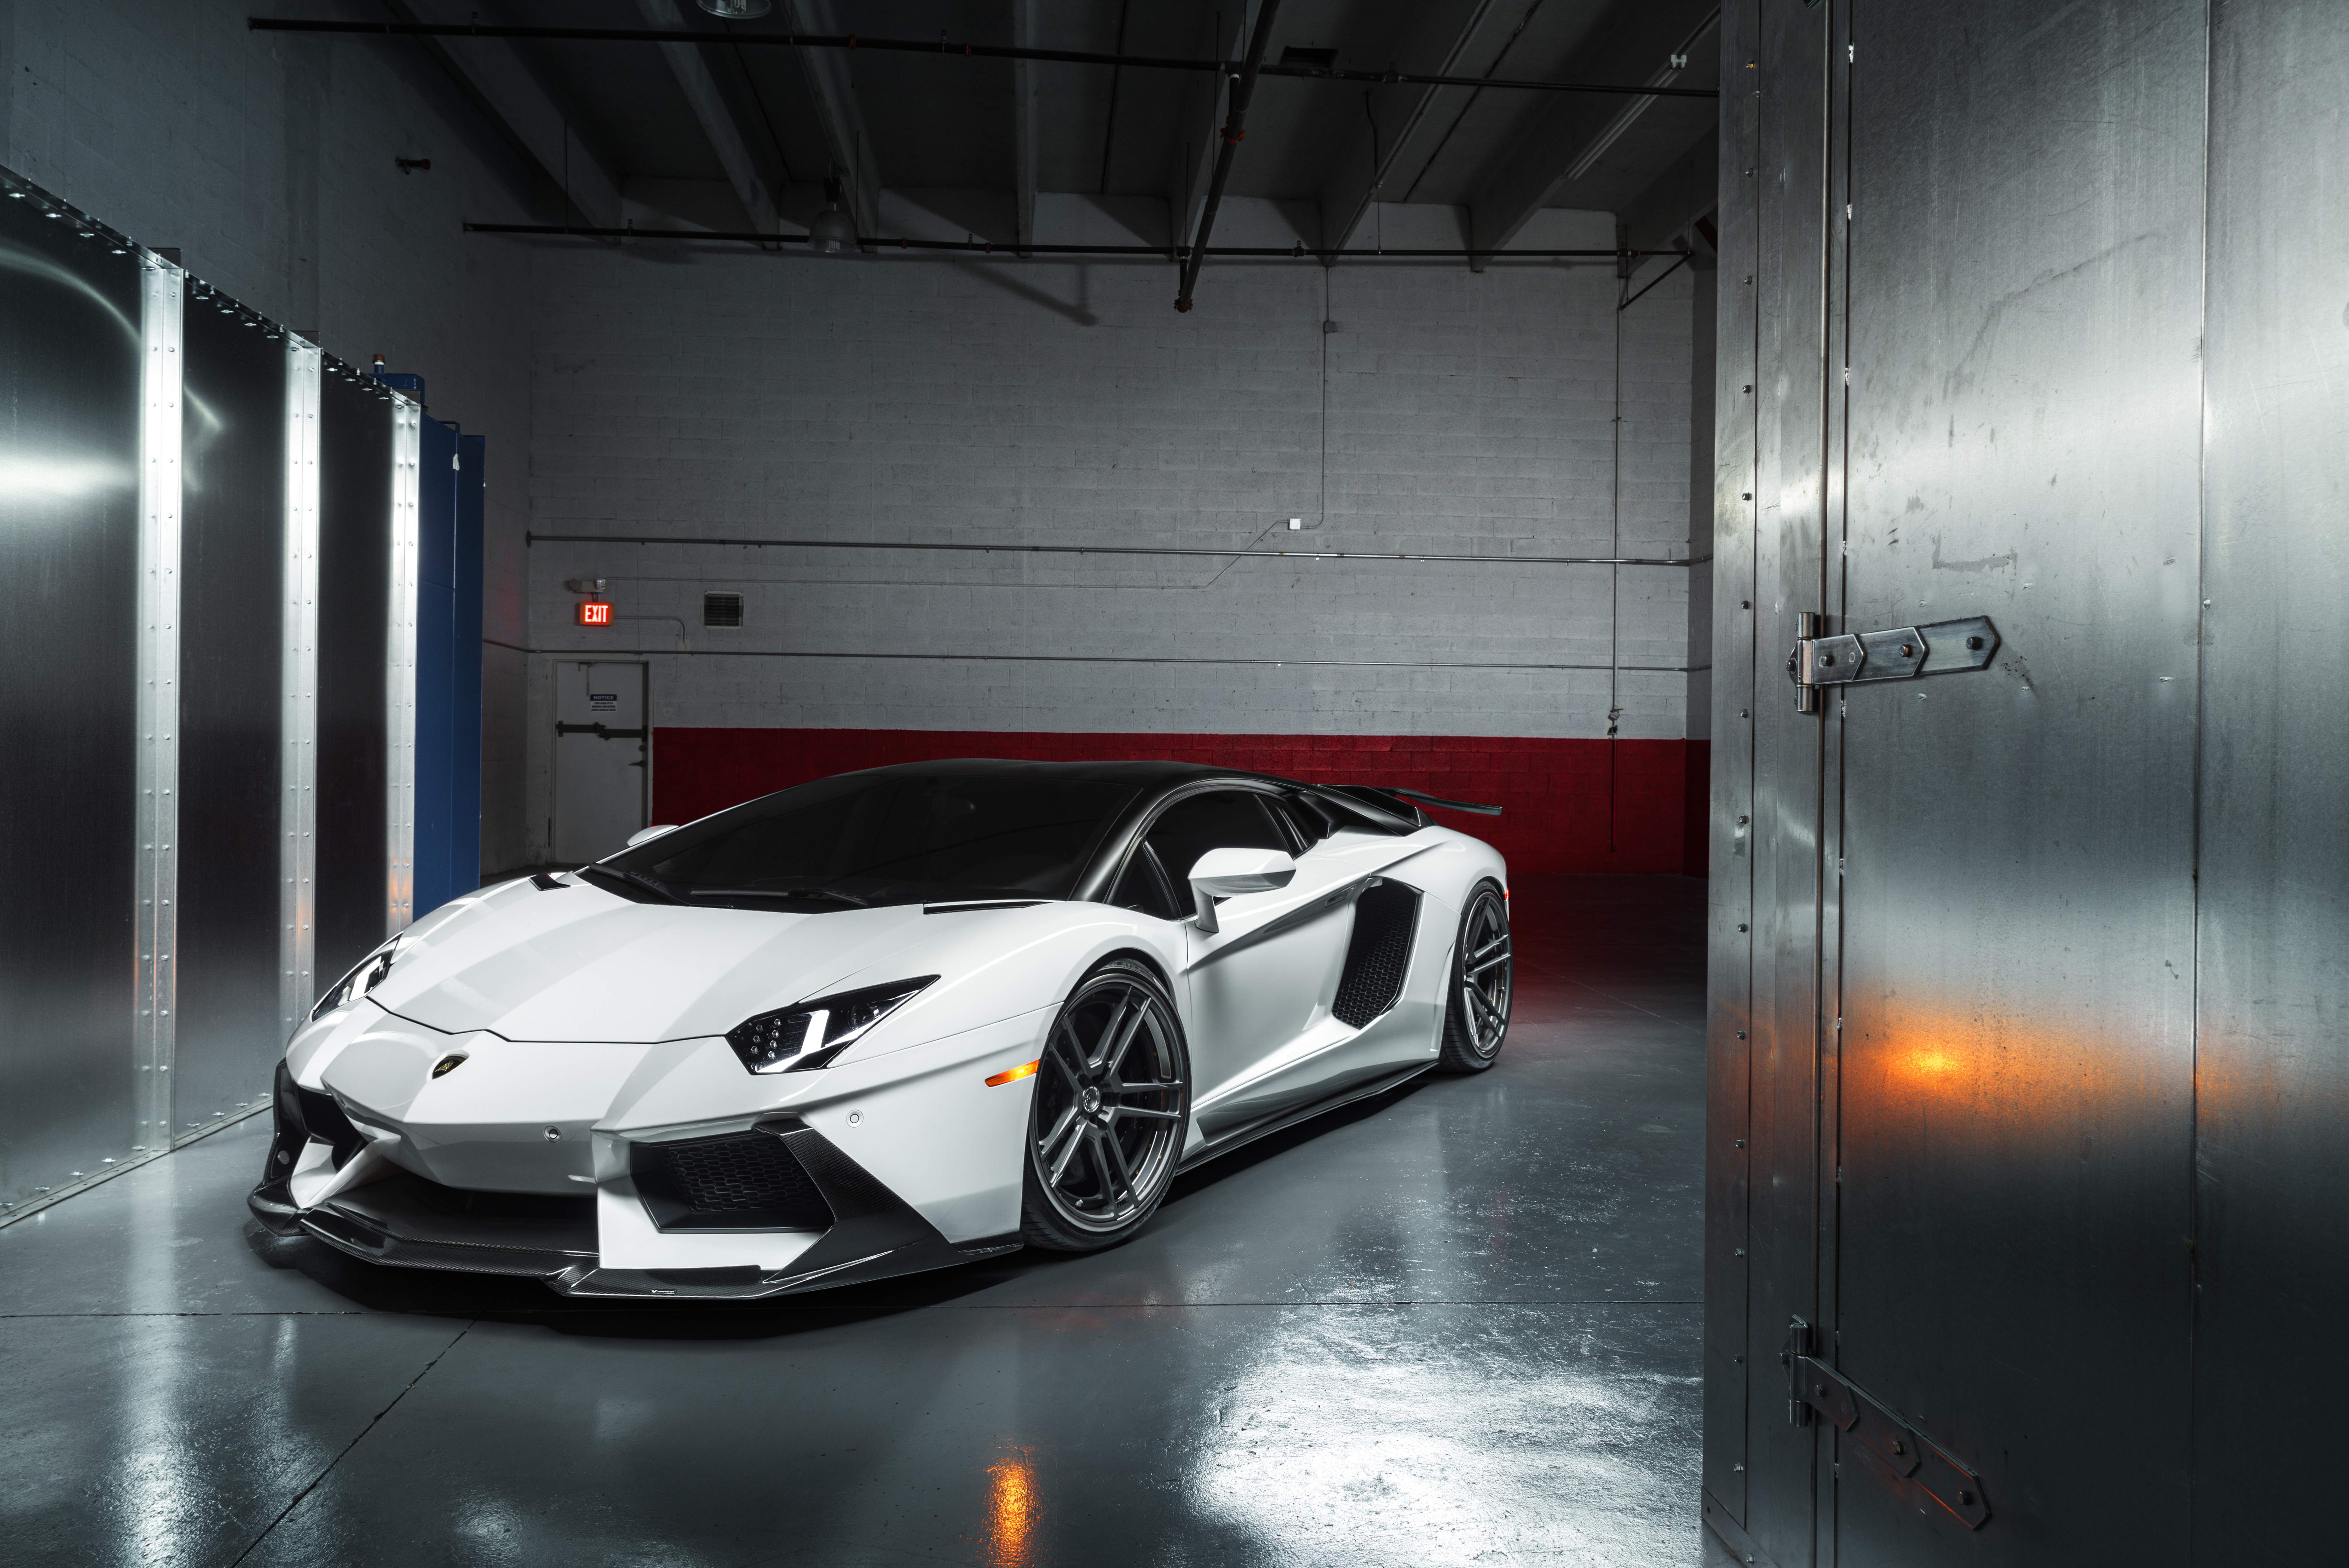 Картинка: Суперкар, гараж, белый, Lamborghini, Aventador